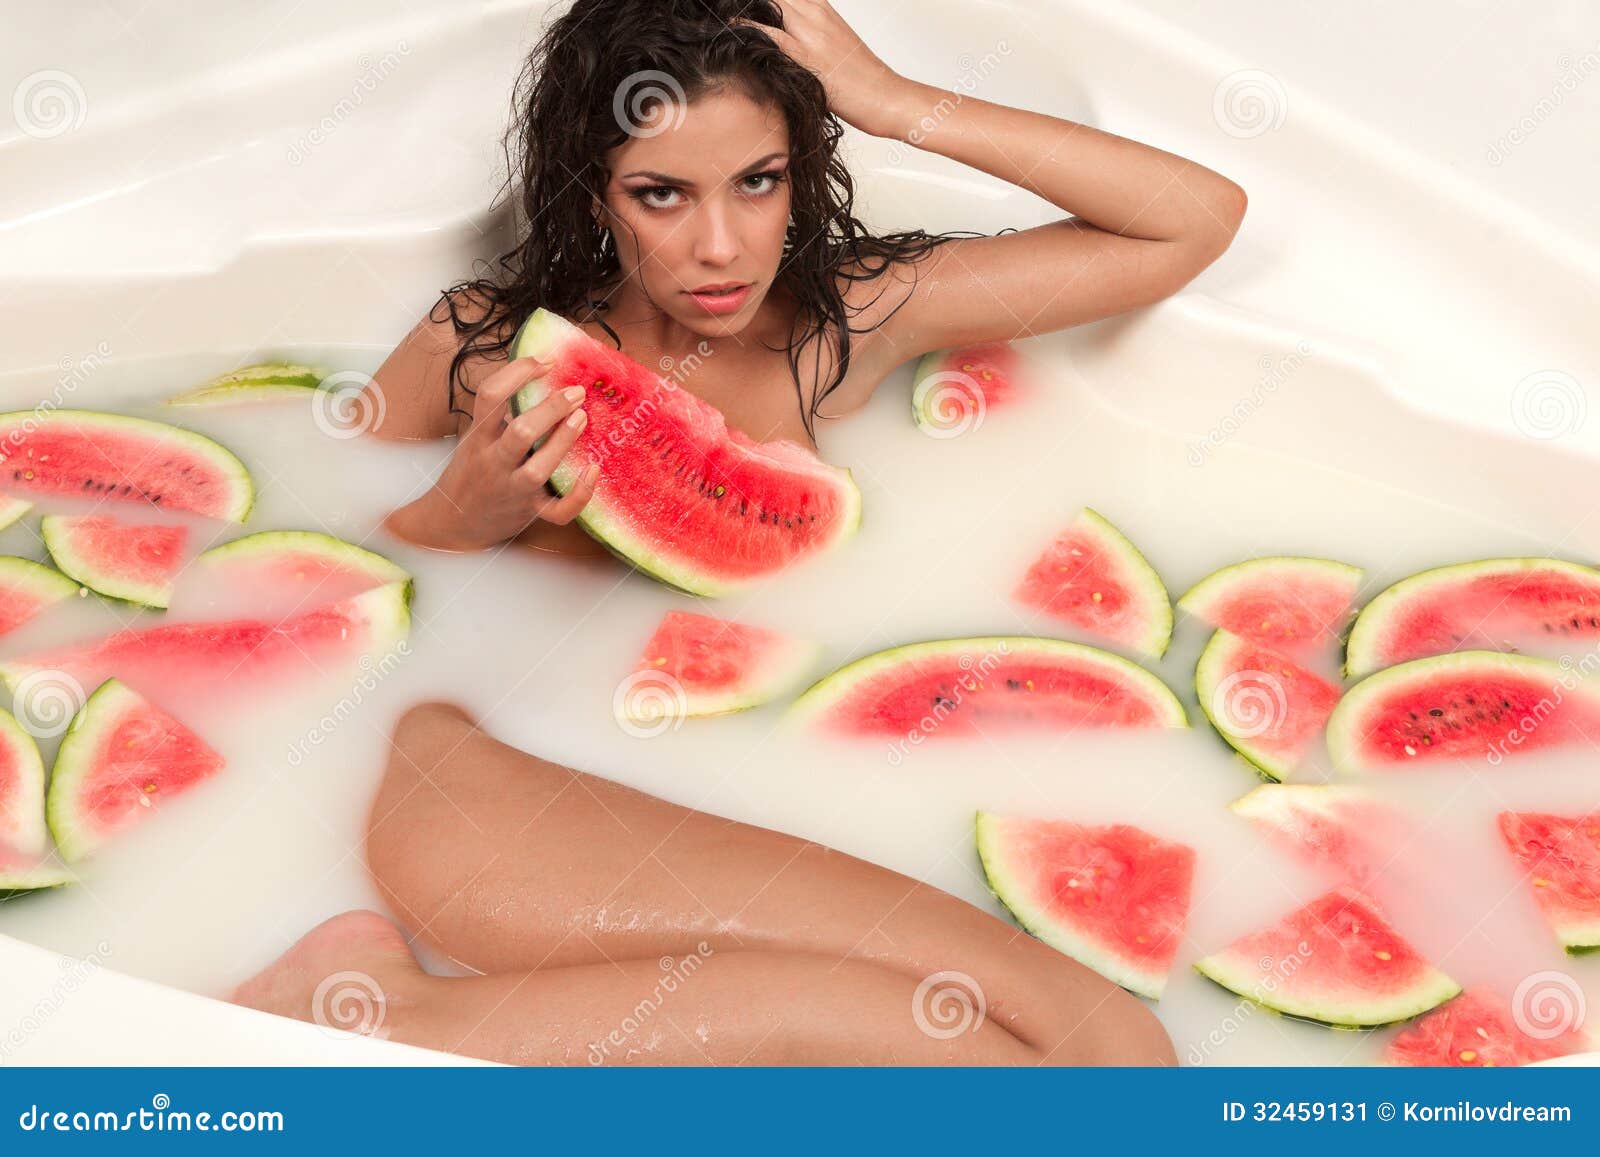 girl-enjoys-bath-milk-watermelon-attractive-naked-slices-32459131.jpg